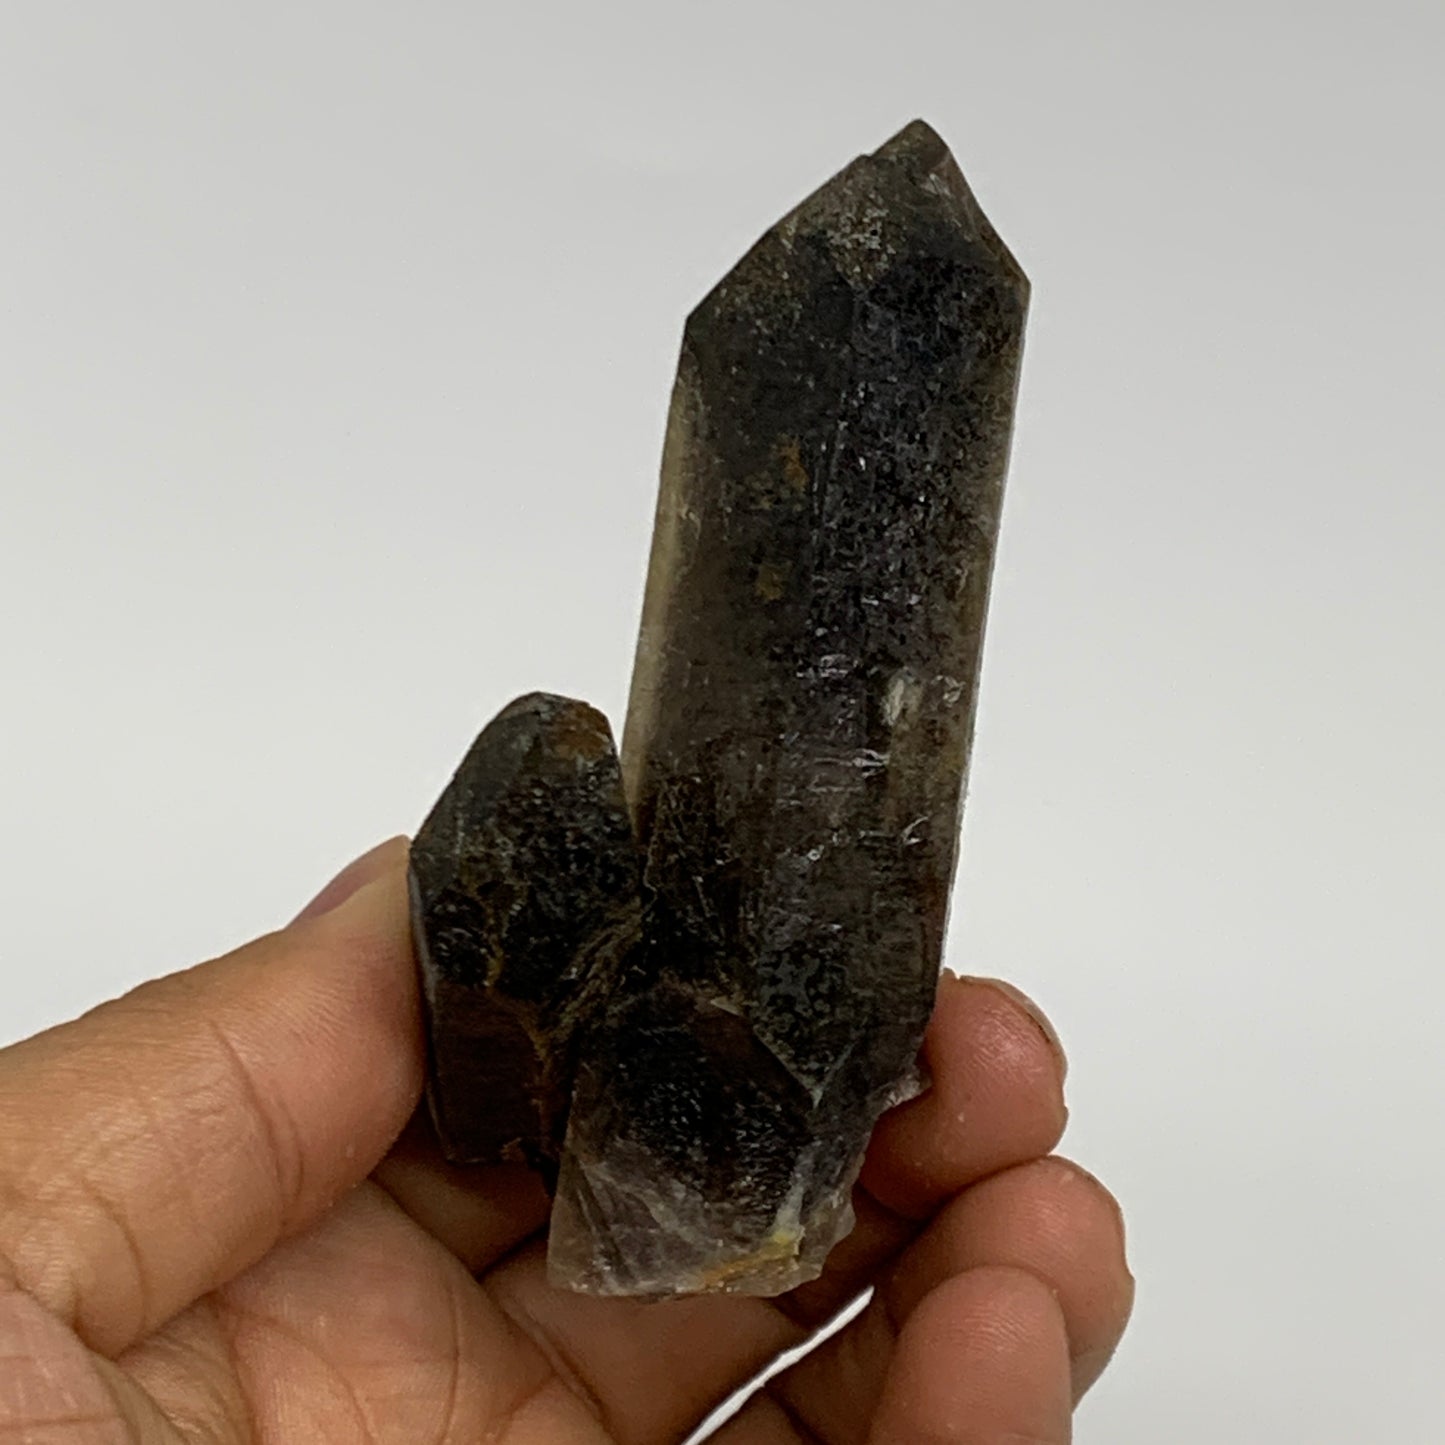 91.1g,3.2"x2.1"x1.4",Smoky Quartz Crystal Mineral,Specimen Terminated,B28954